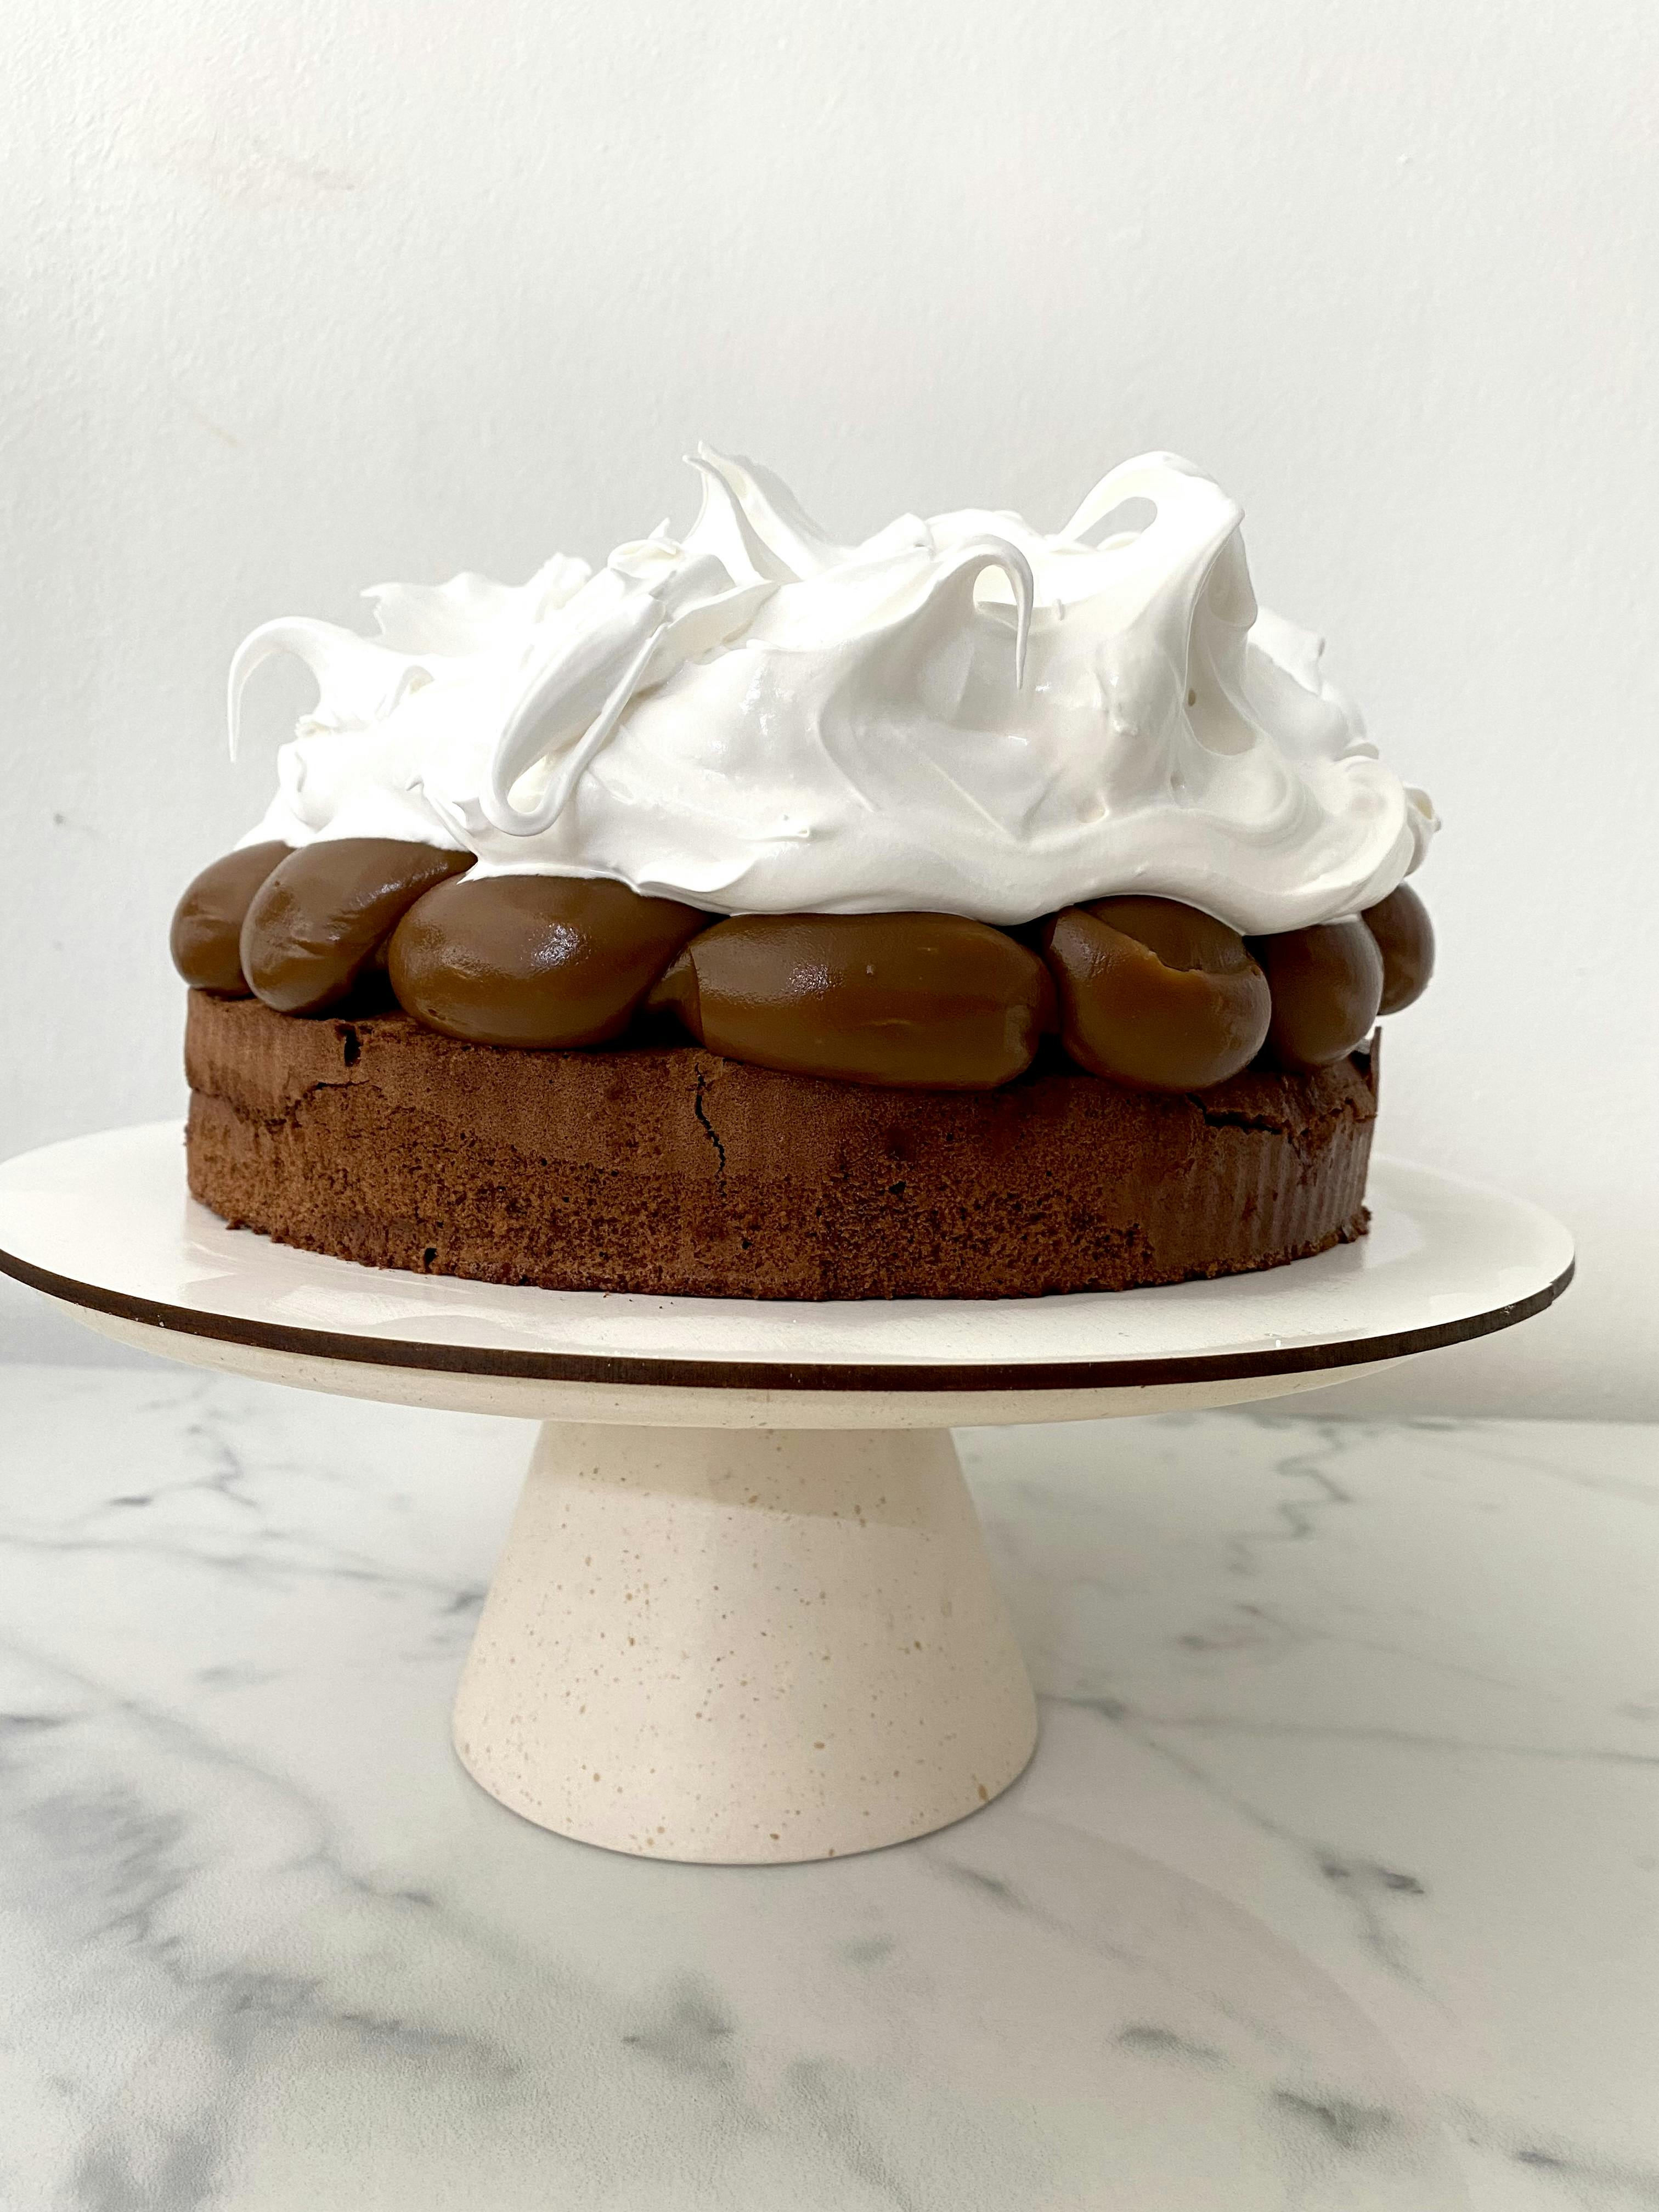 Torta Brownie con merengue italiano 